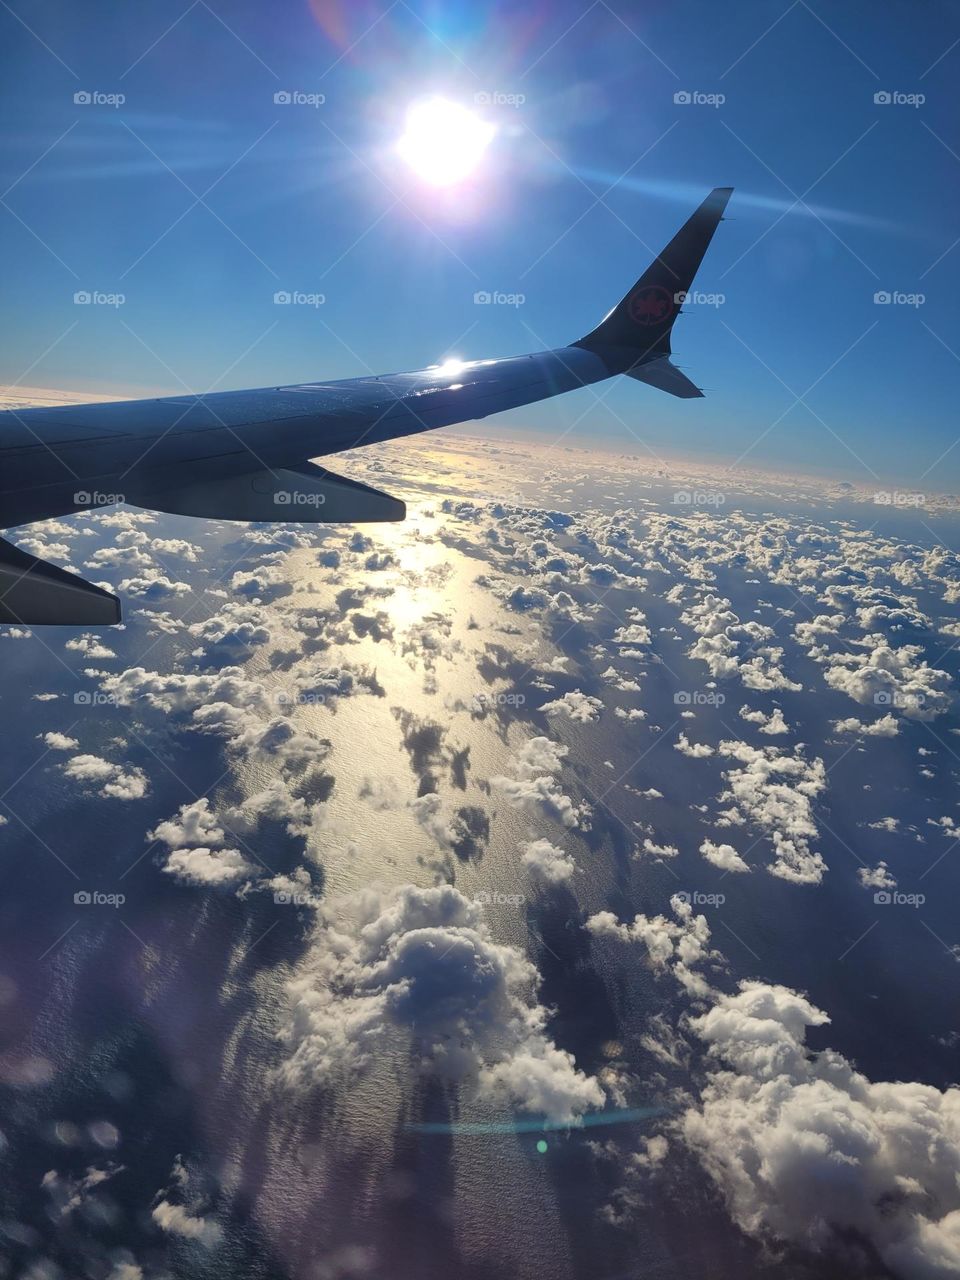 Aviation Flight on reflective clouds